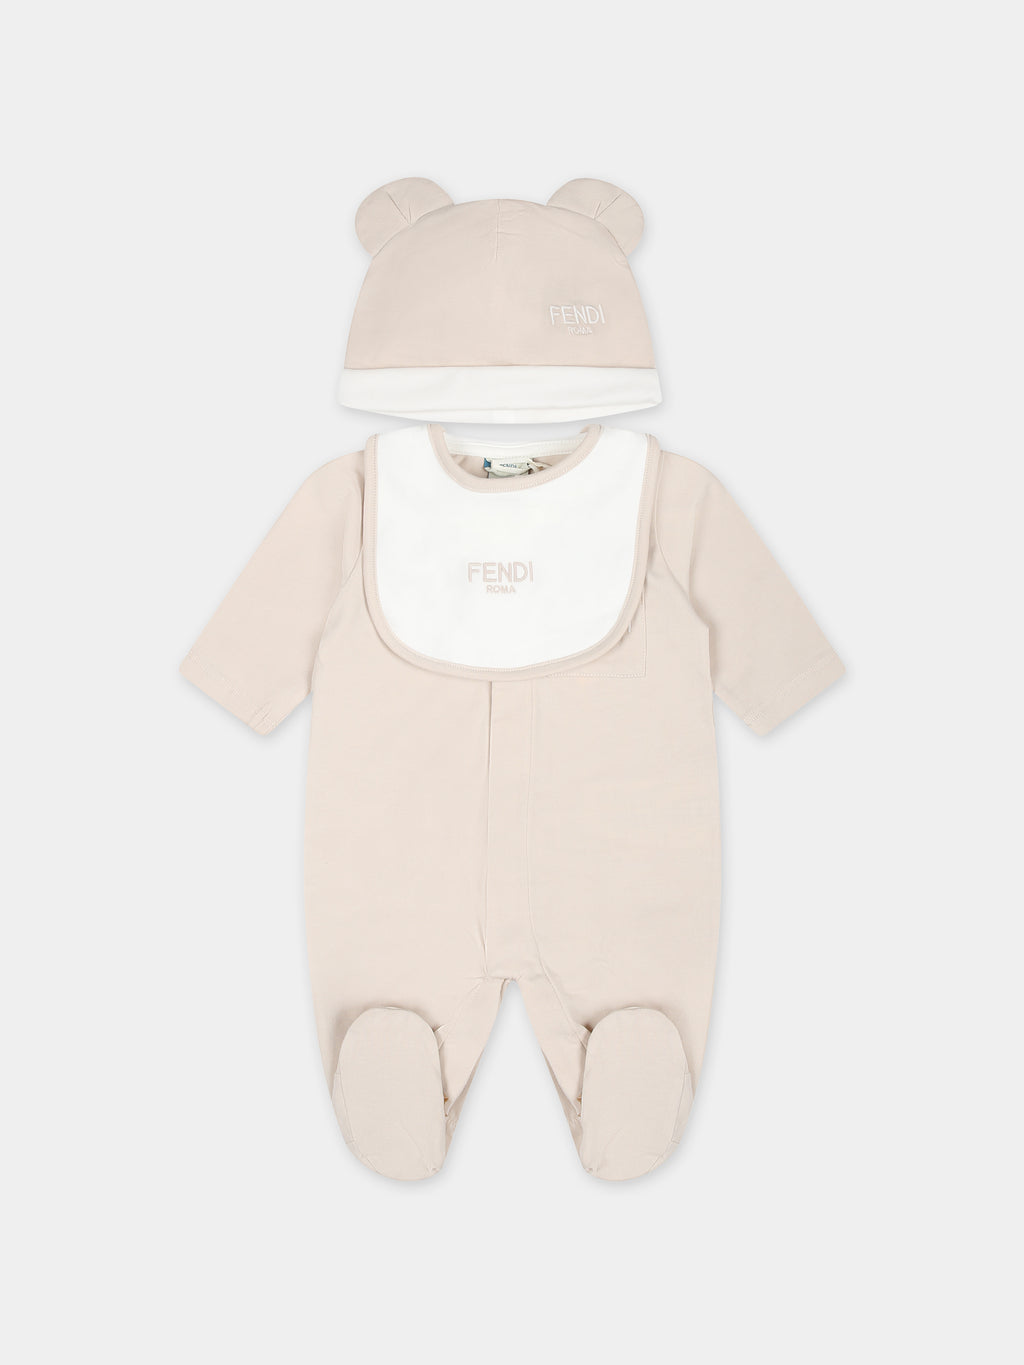 Beige babygrow set for babykids with bear and Fendi logo